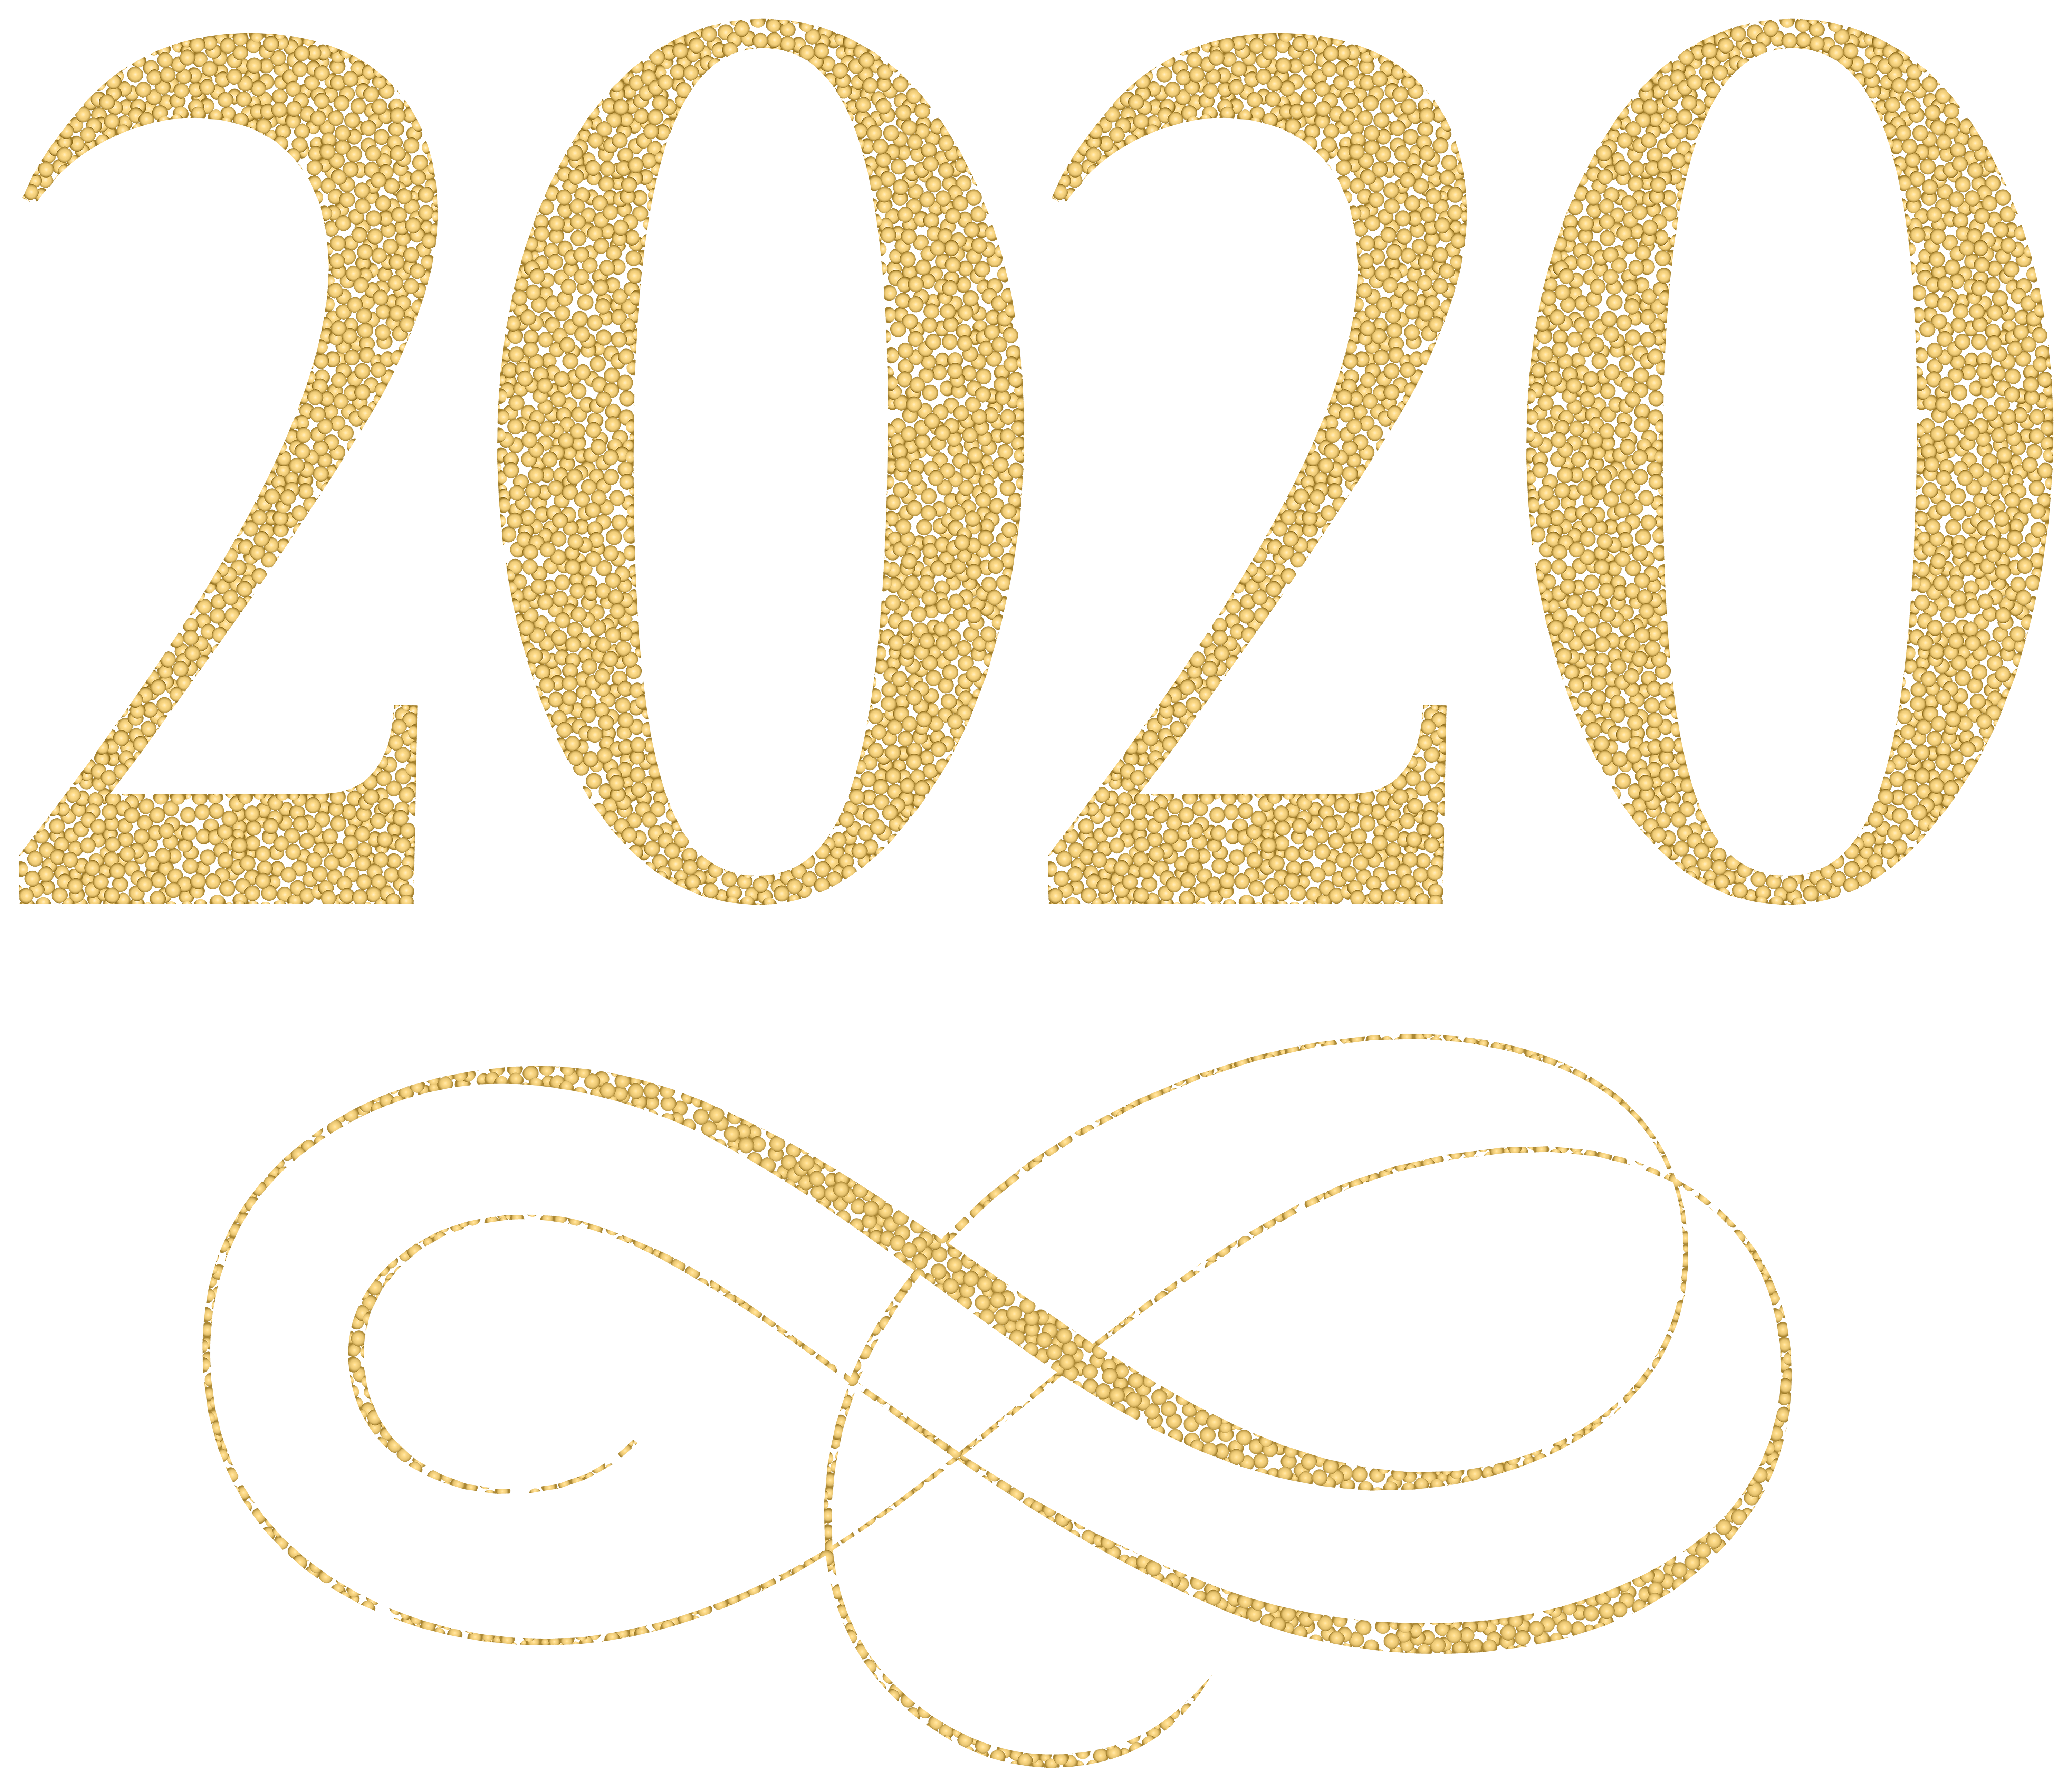 2020 gold. Золотые цифры. Надпись 2020 год на прозрачном фоне. Золотые цифры на прозрачном фоне. Красивые цифры 2020.